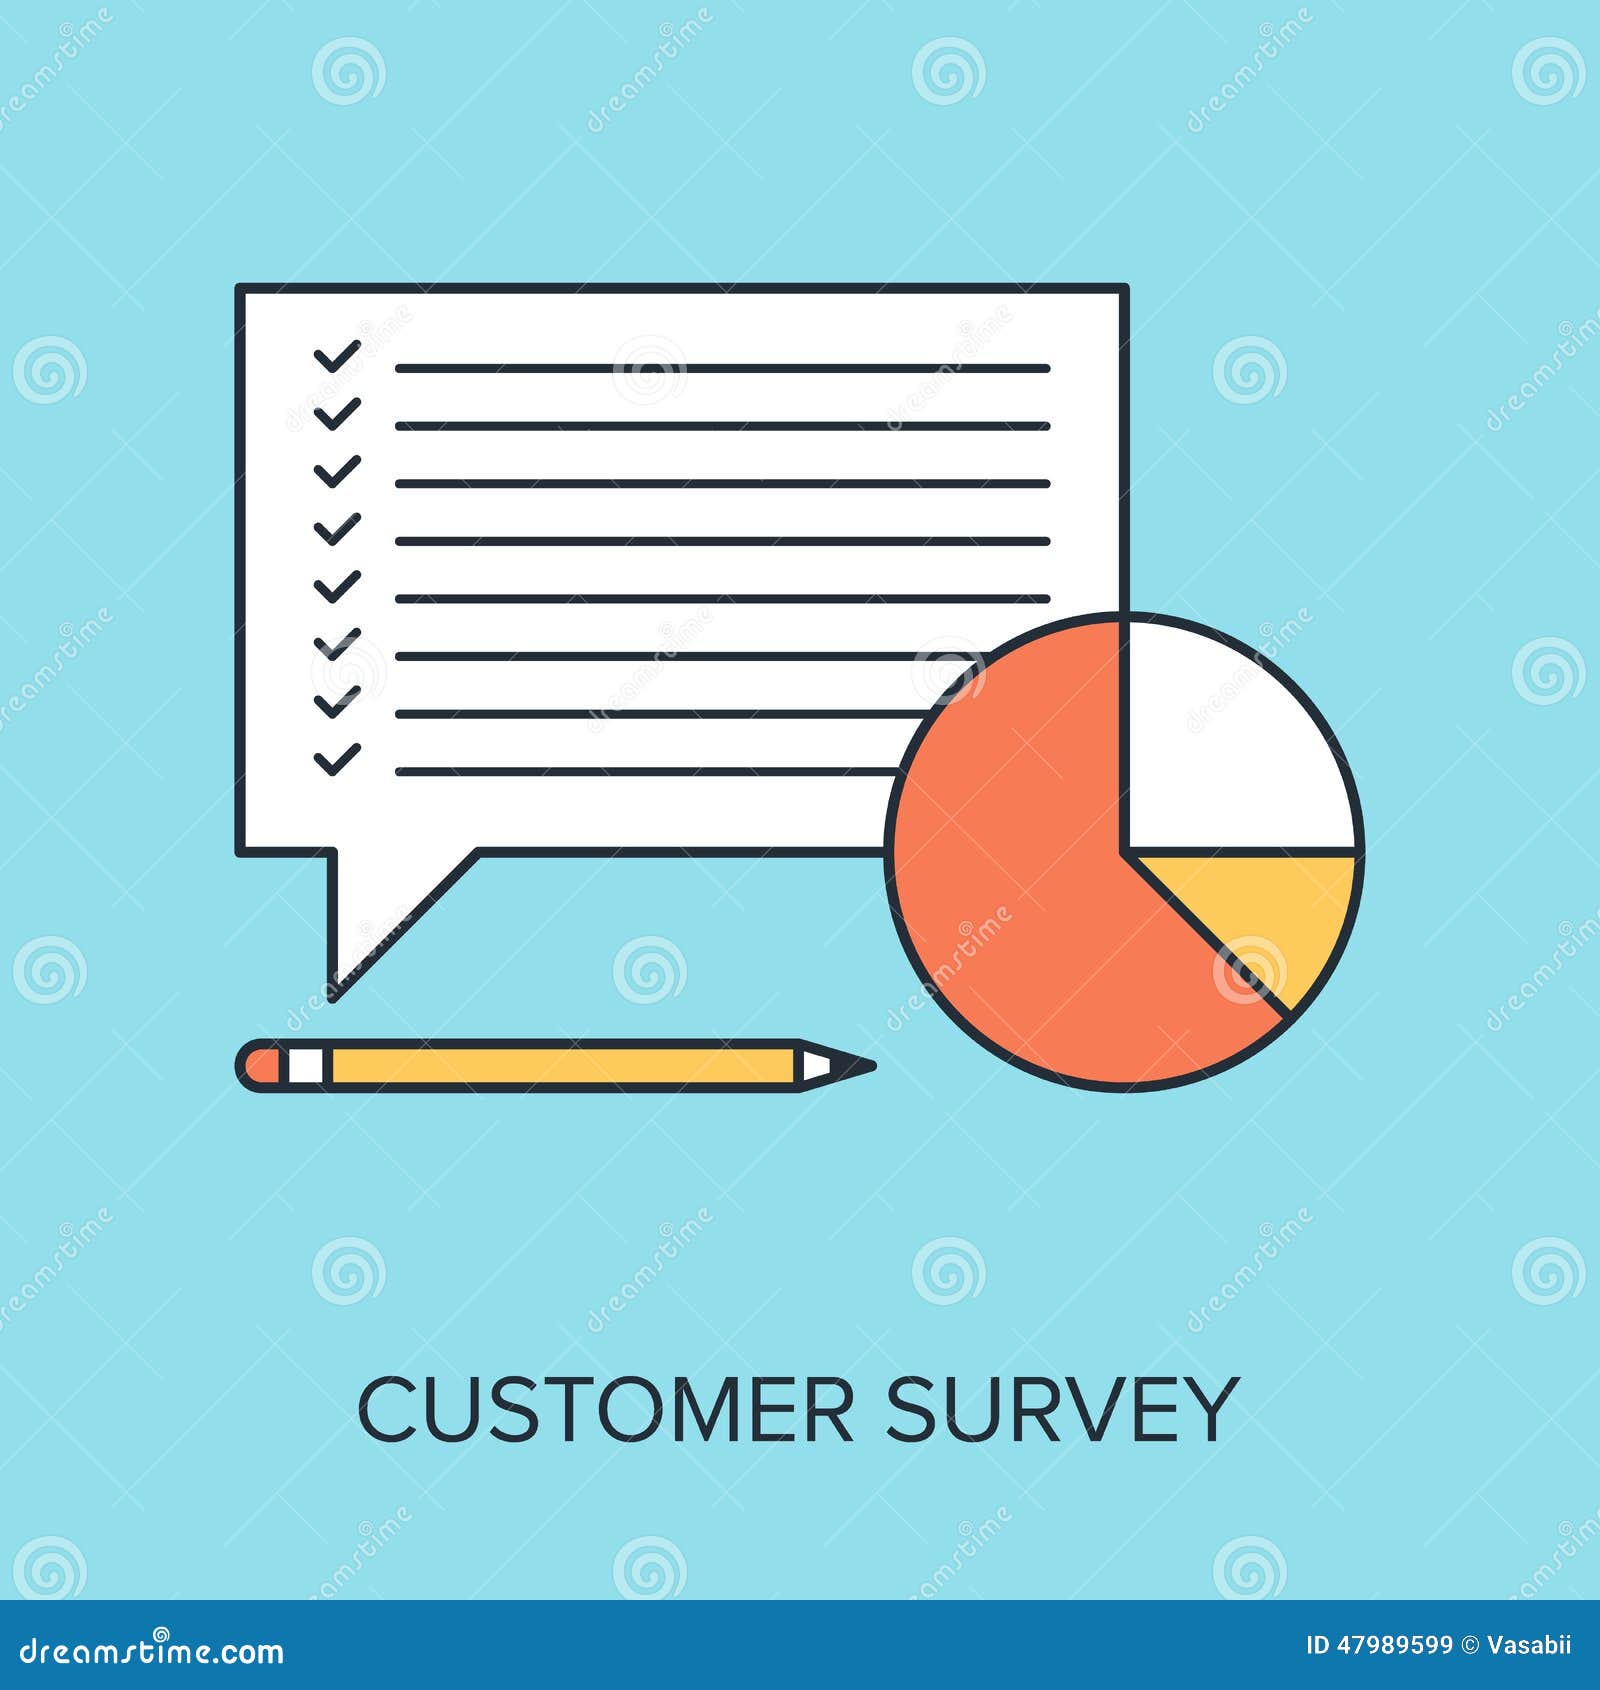 customer survey design